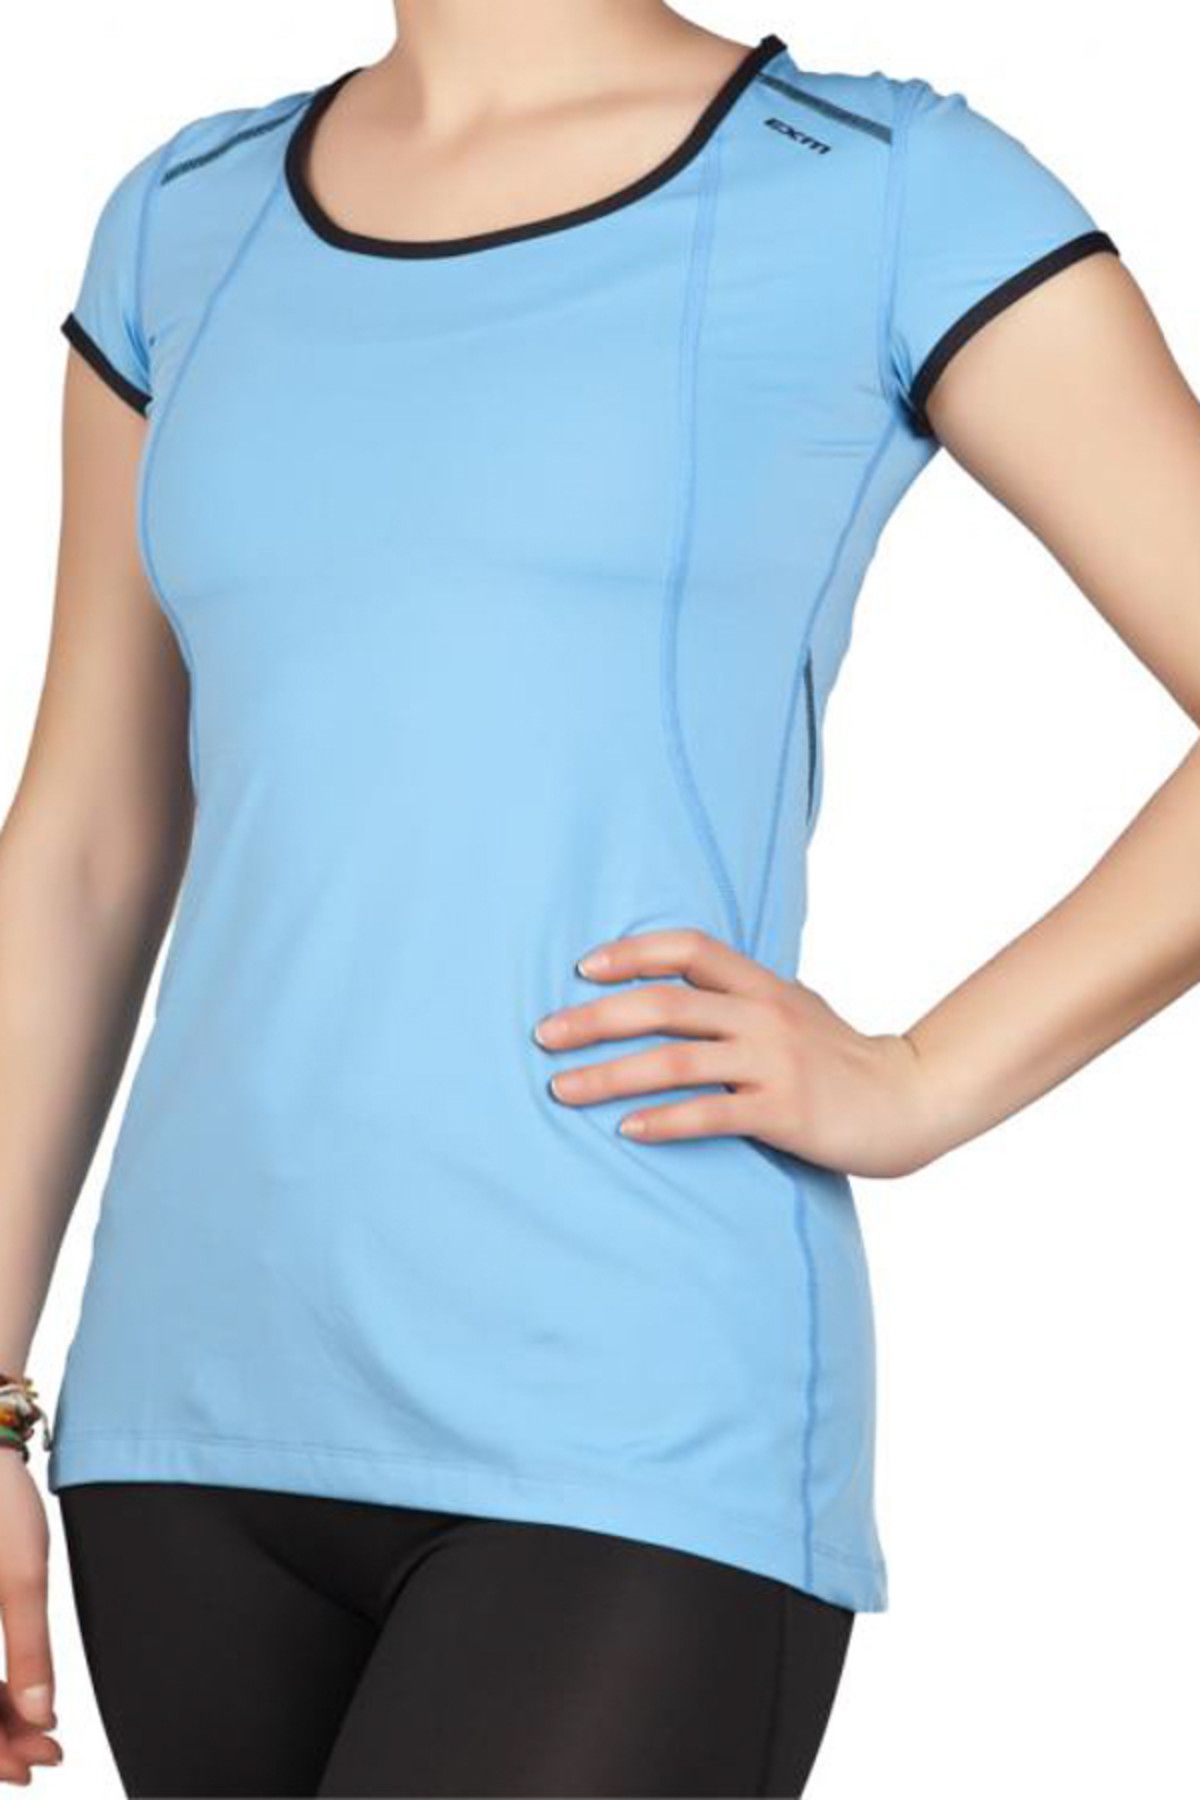 Exuma Kadın Mavi T-shirt - 142252